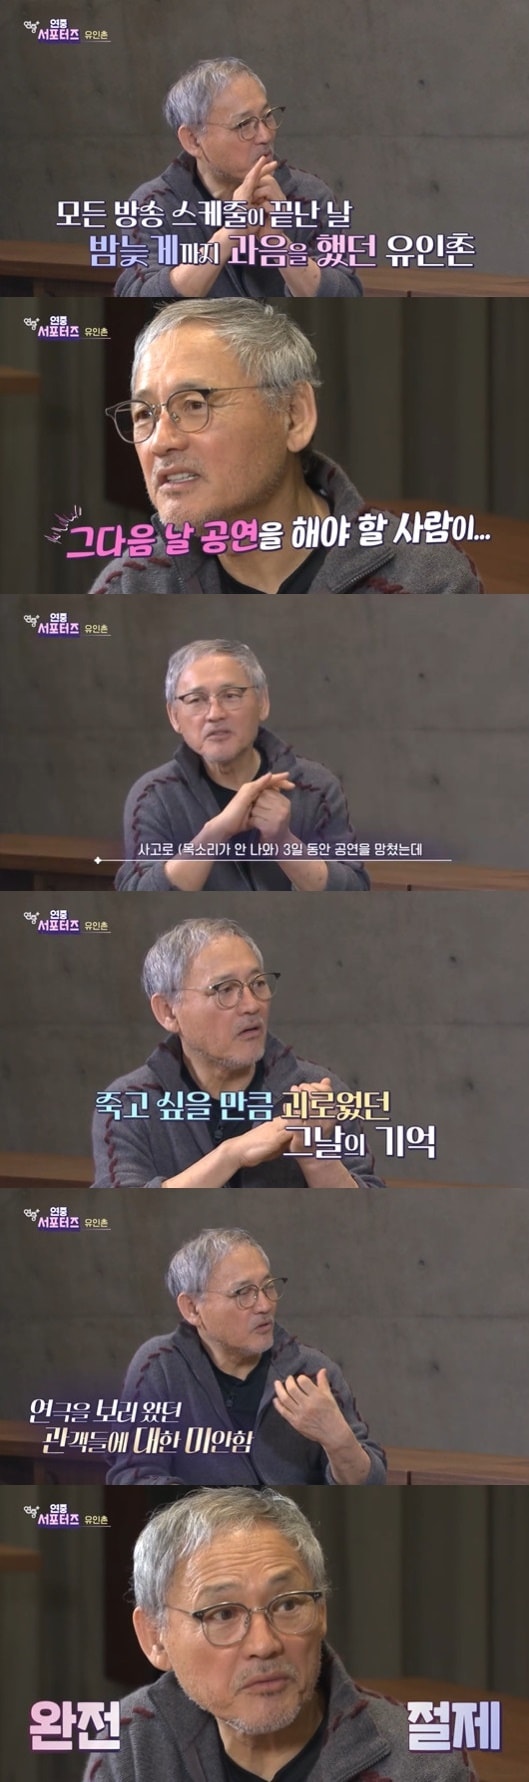 KBS 2TV '연중 라이브' 방송 화면 캡처